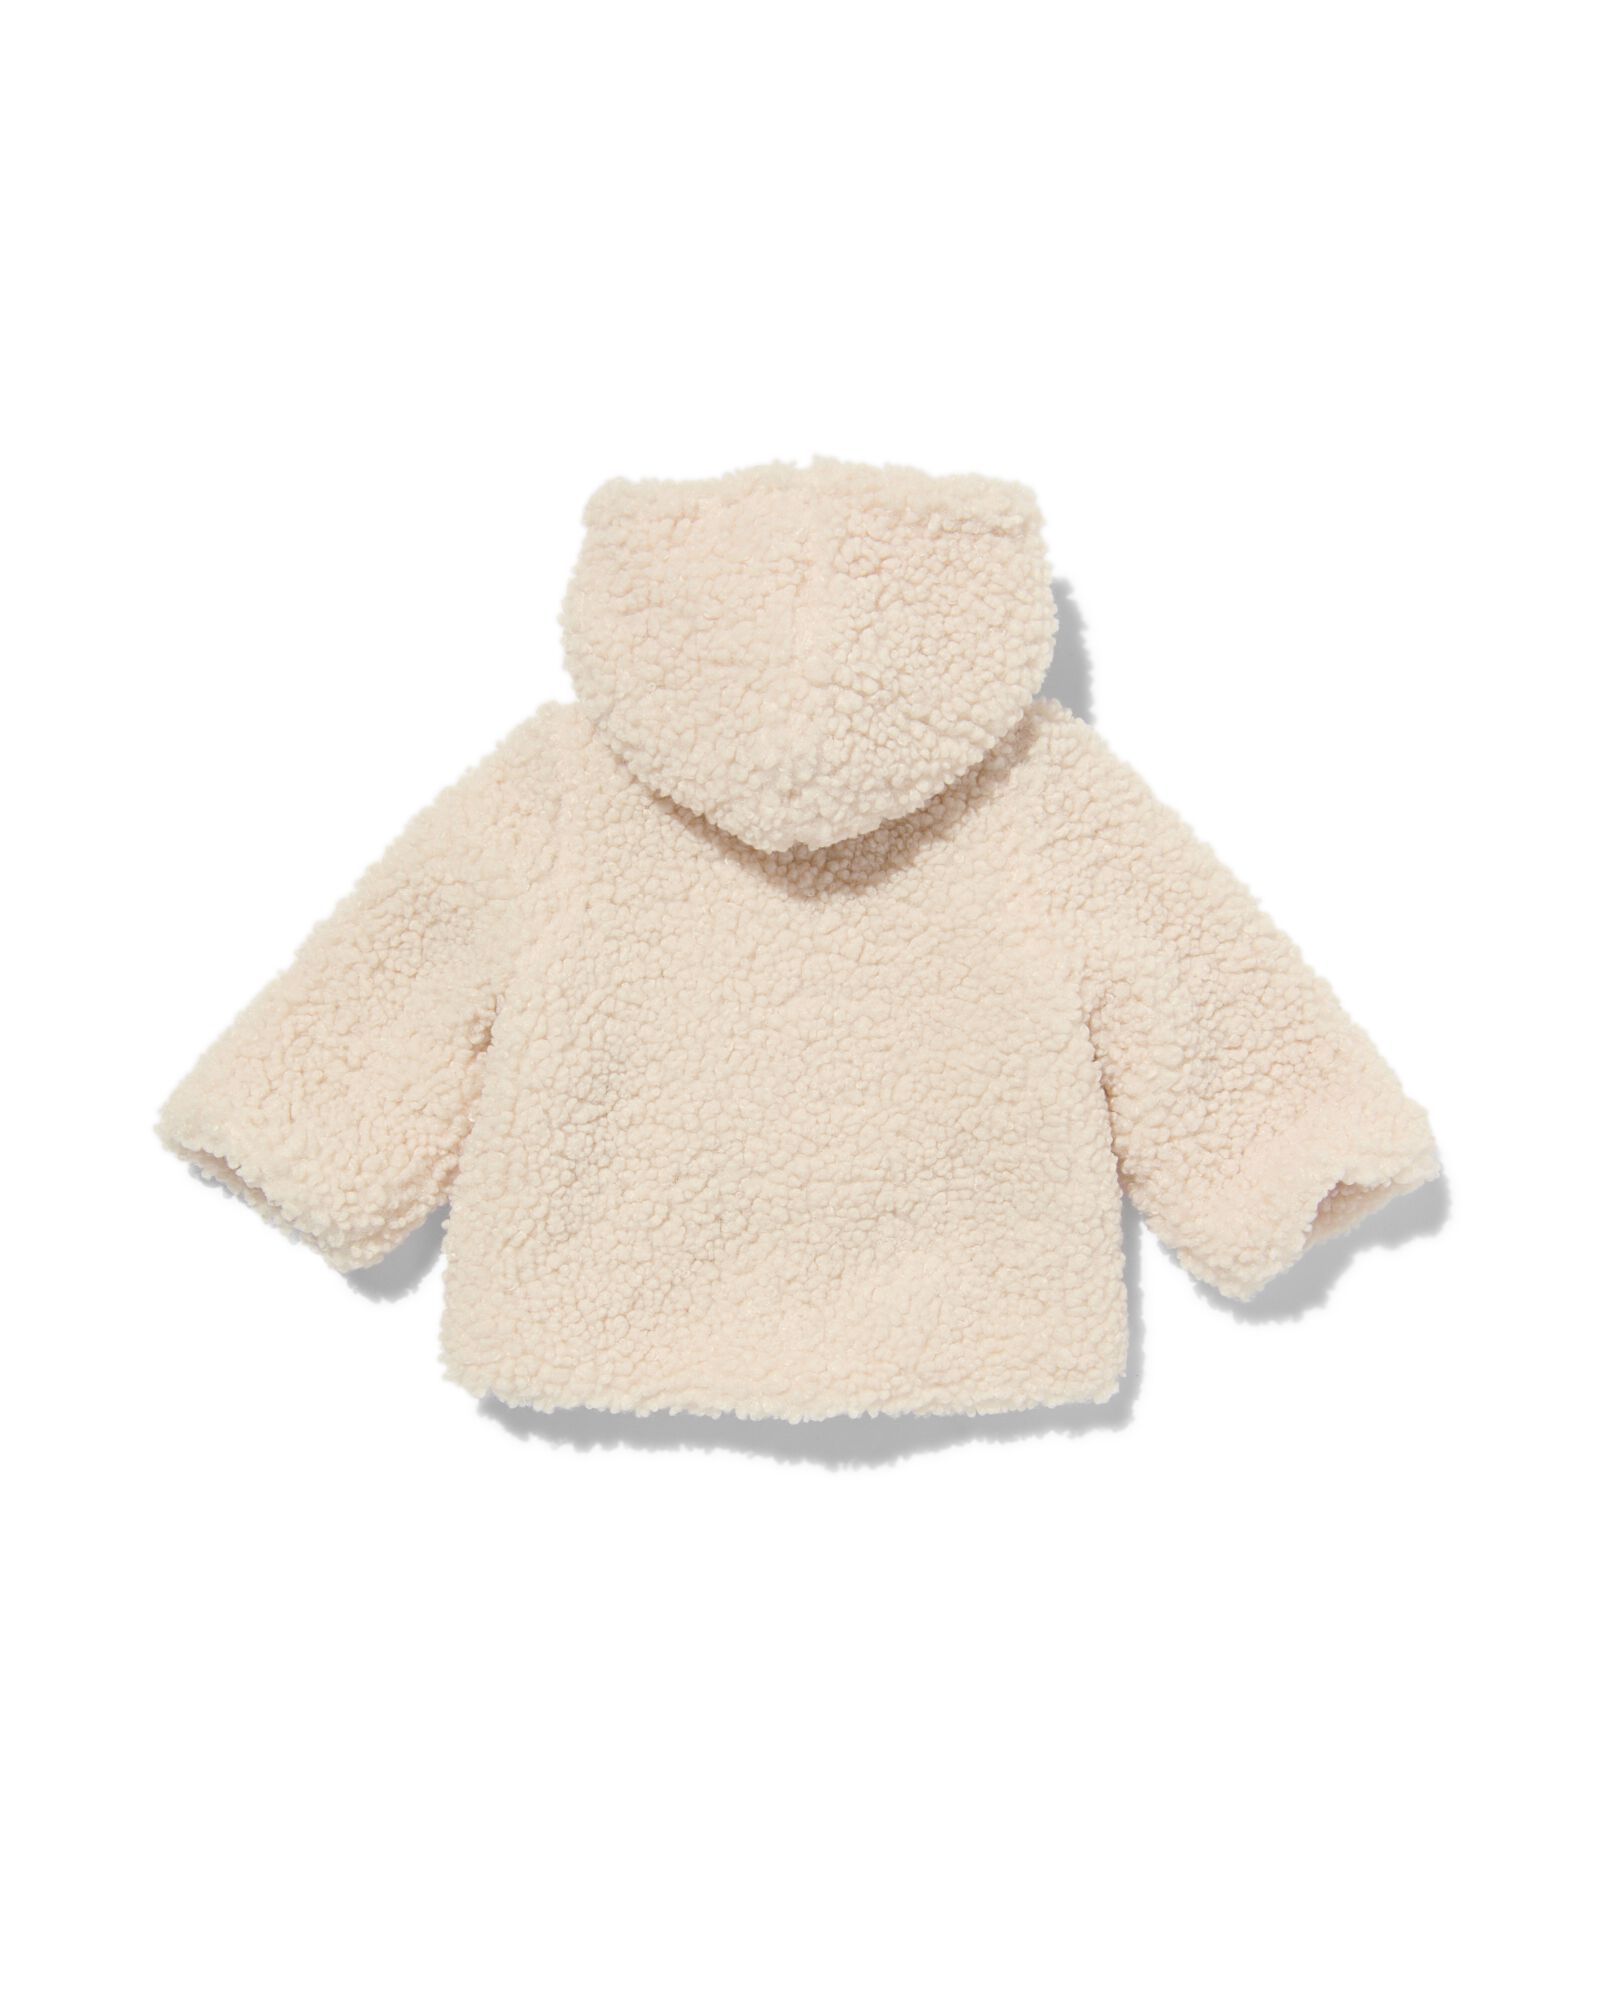 manteau bébé teddy avec capuche écru écru - 33176540ECRU - HEMA